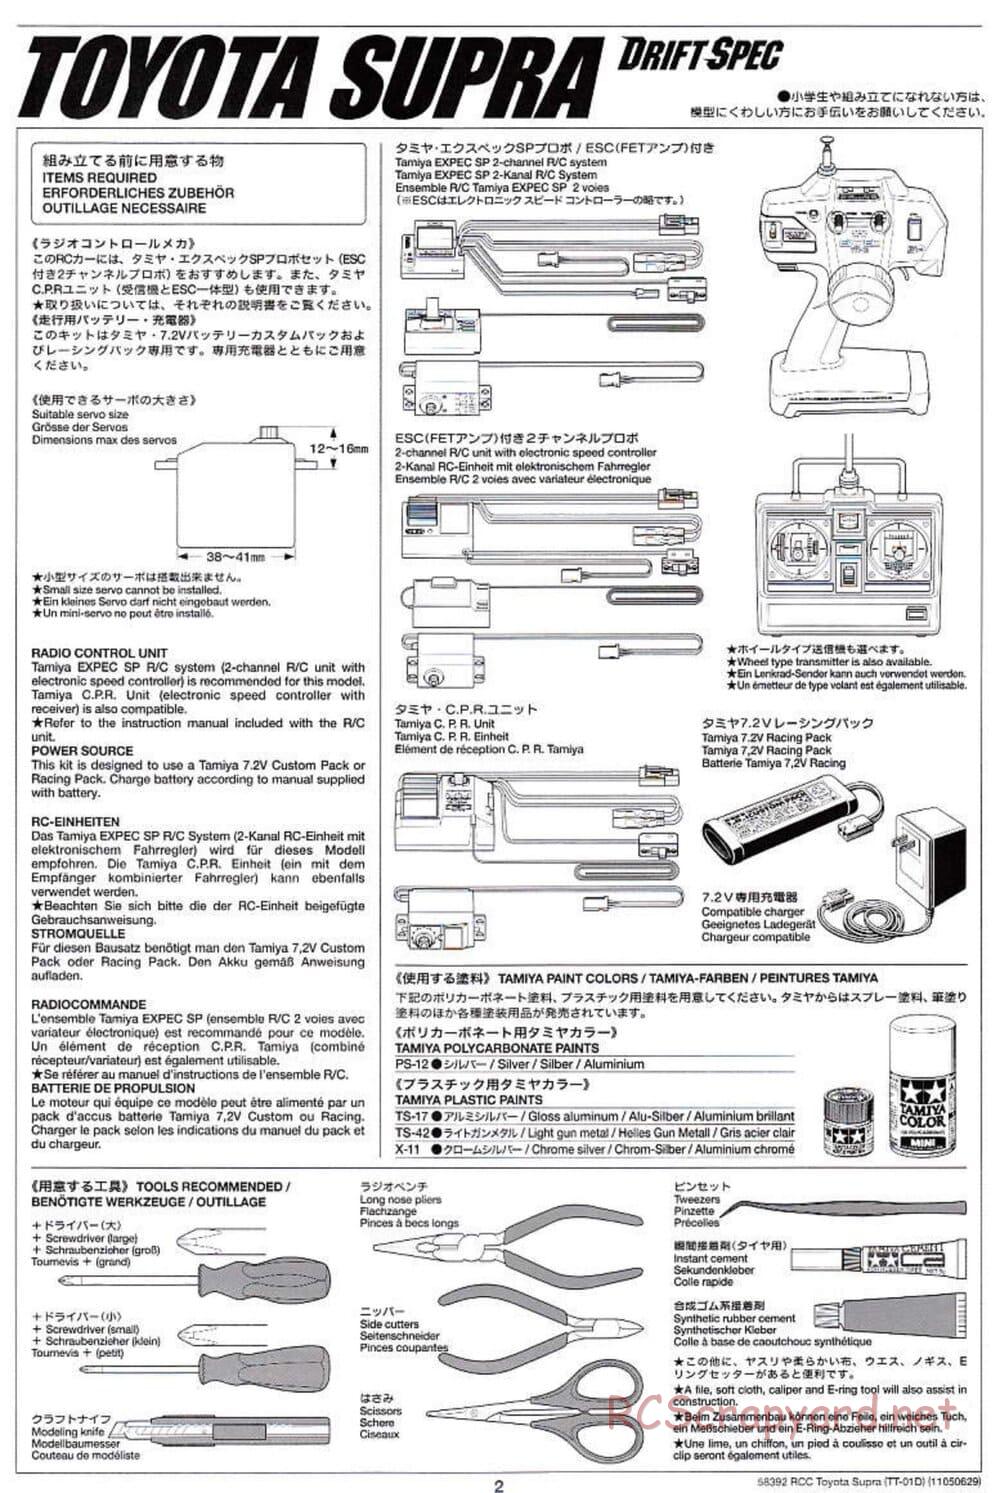 Tamiya - Toyota Supra - Drift Spec - TT-01D Chassis - Manual - Page 2